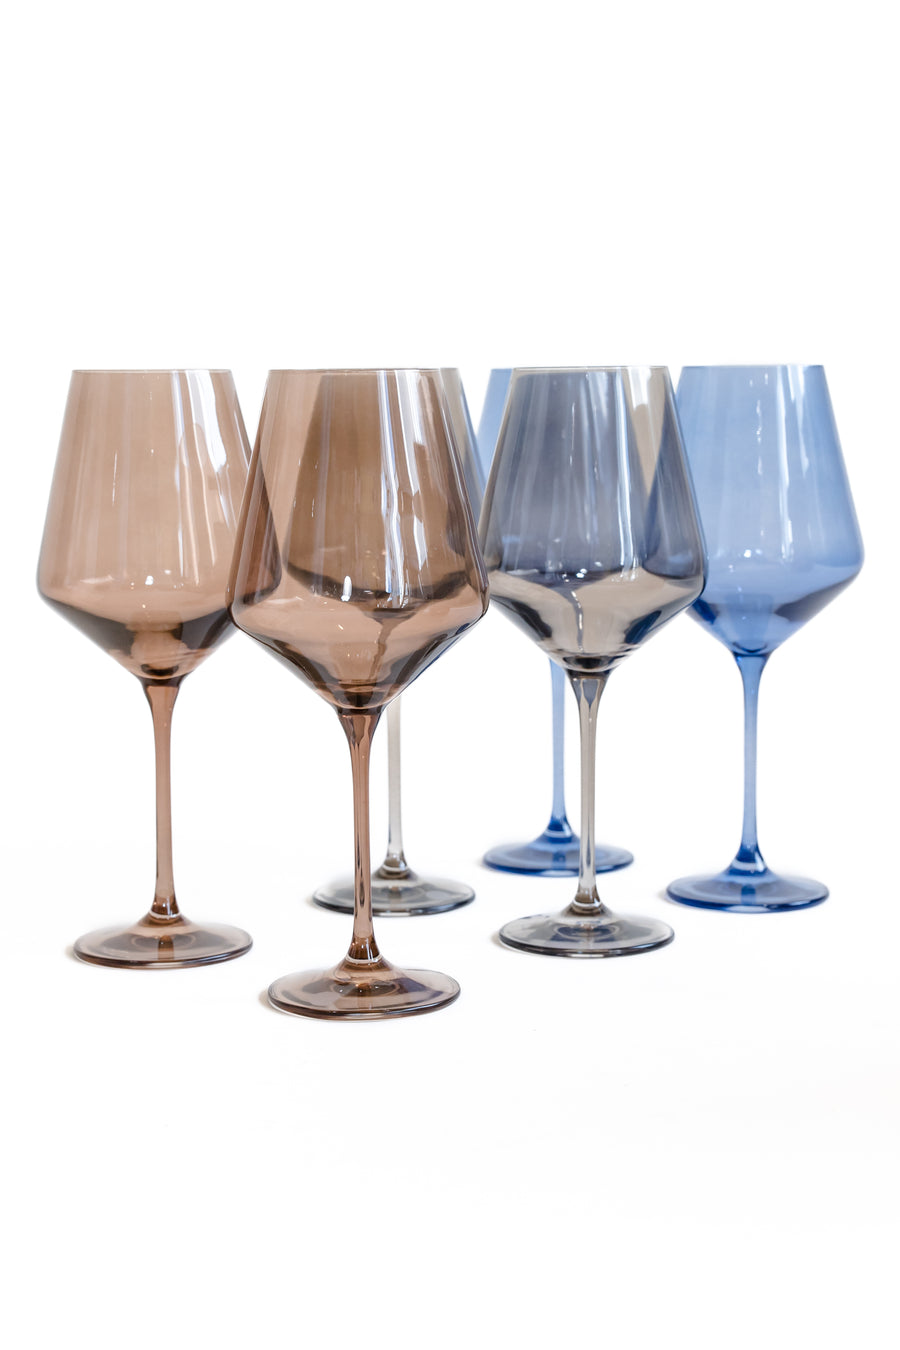 Stemware Wine Glasses - Set of 6